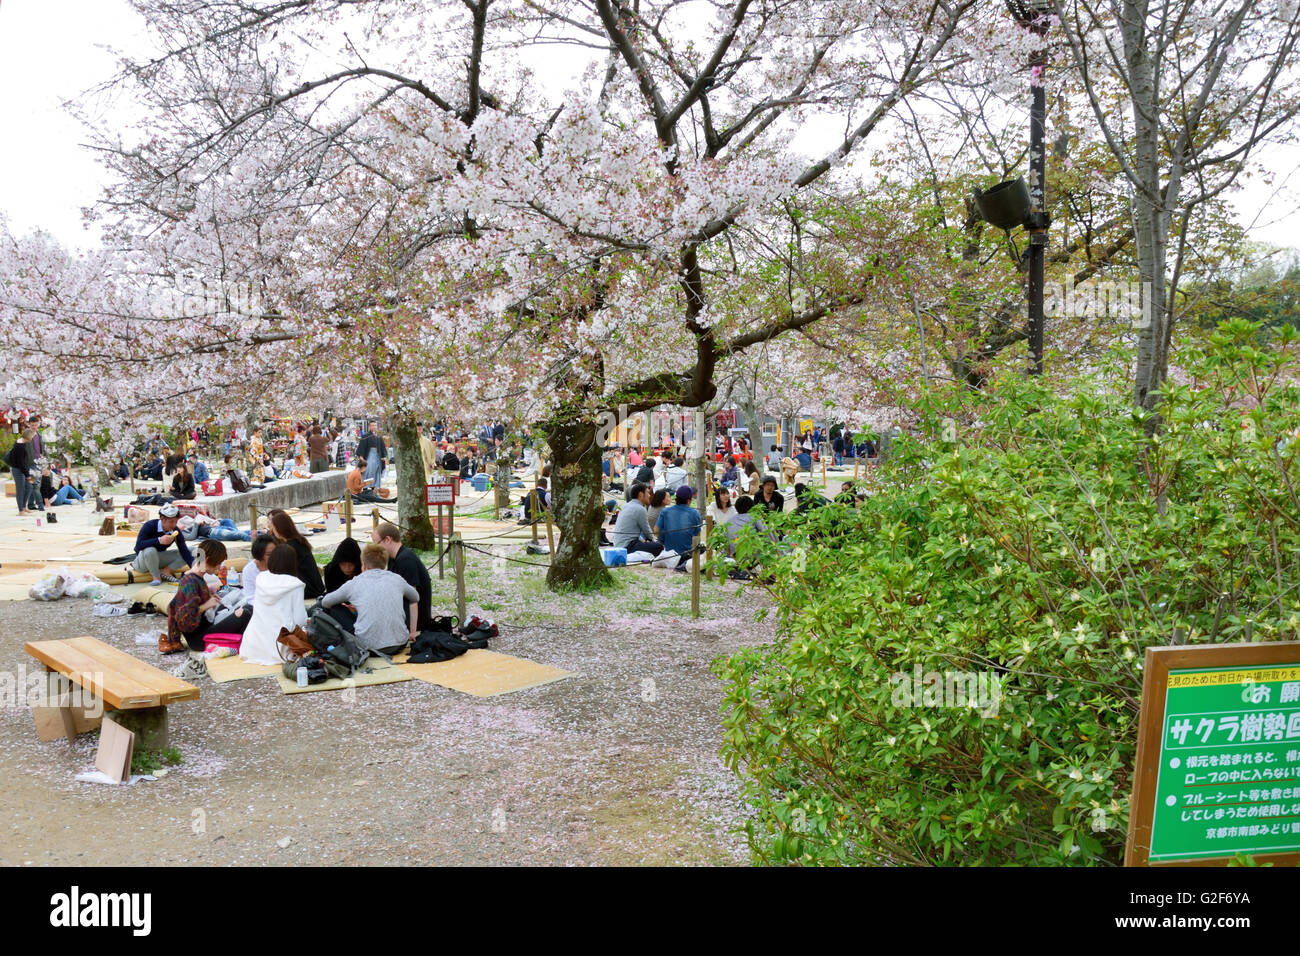 Picnics & Cherry Blossom Viewing, Maruyama Park Stock Photo